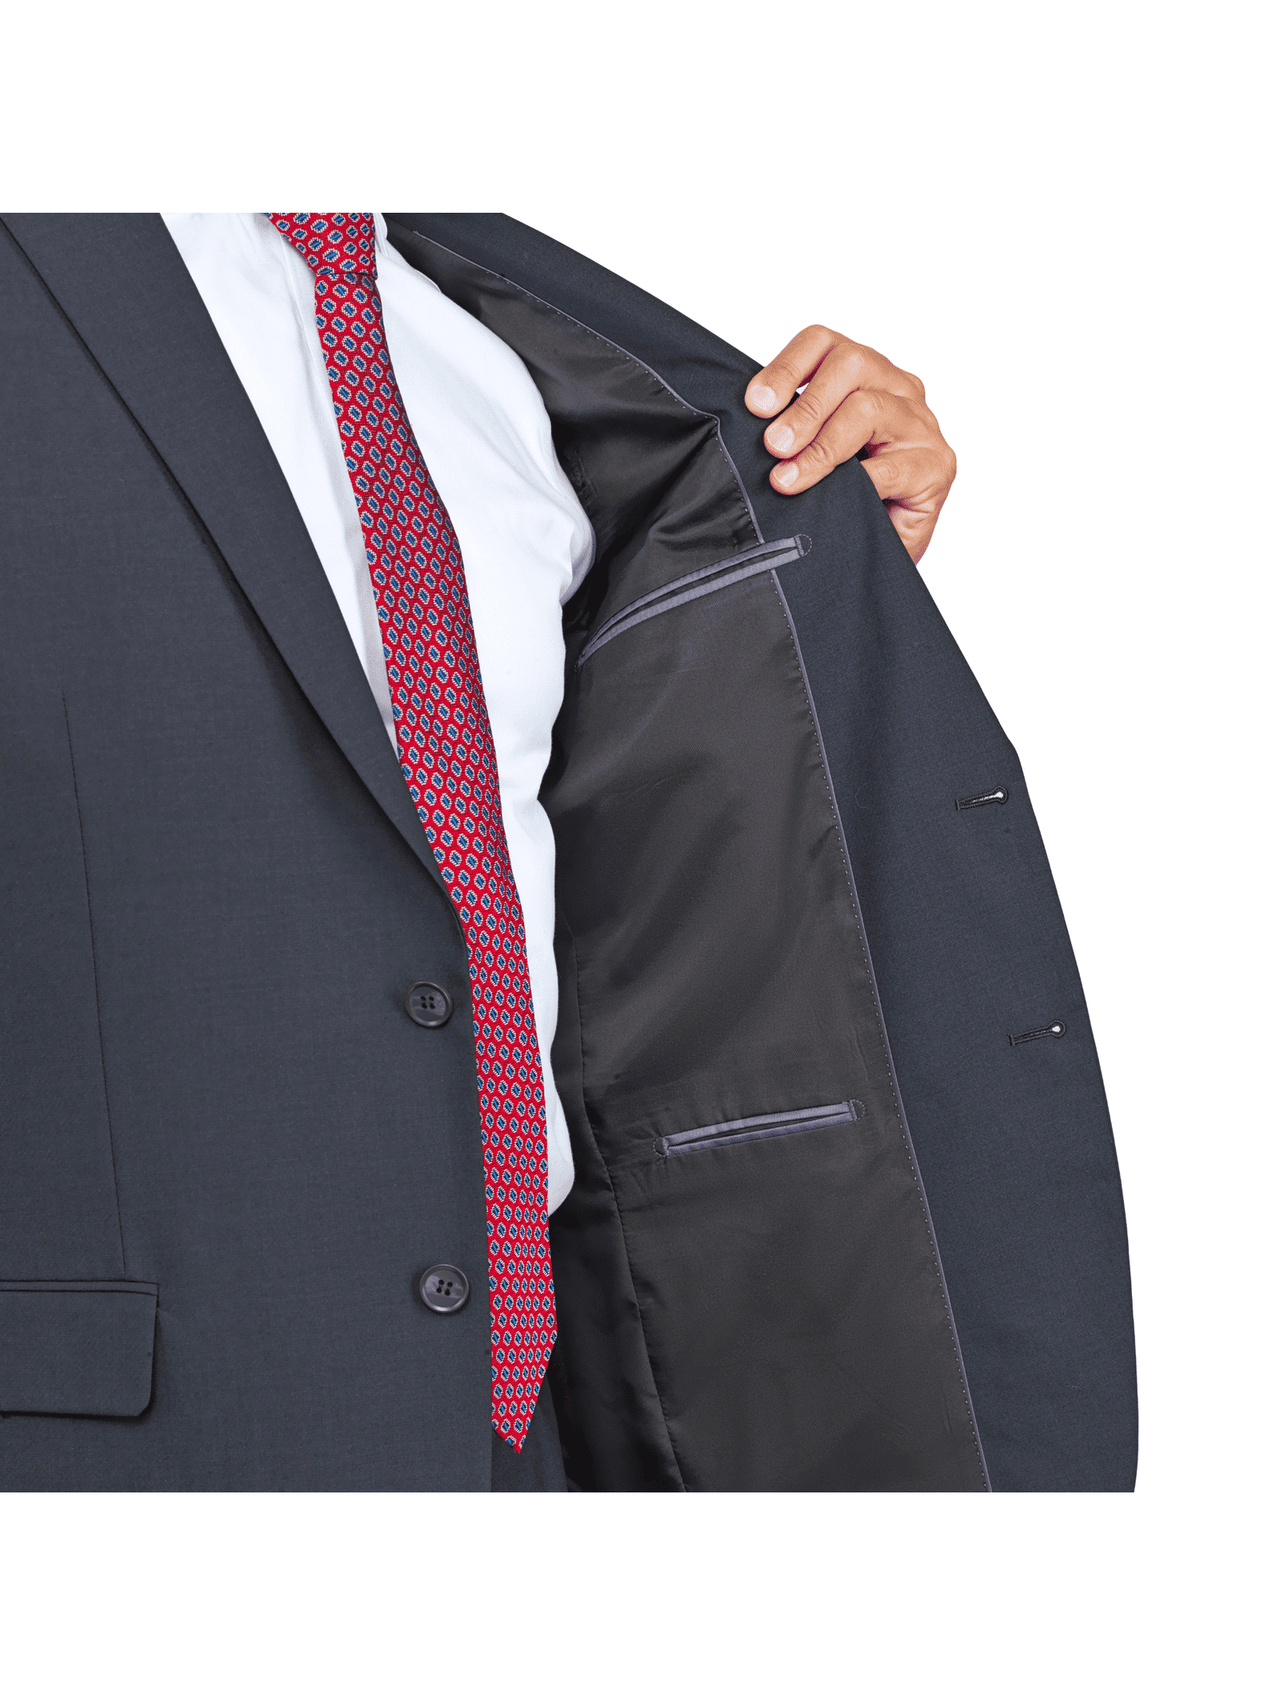 lining of black 100% wool men's suit jacket